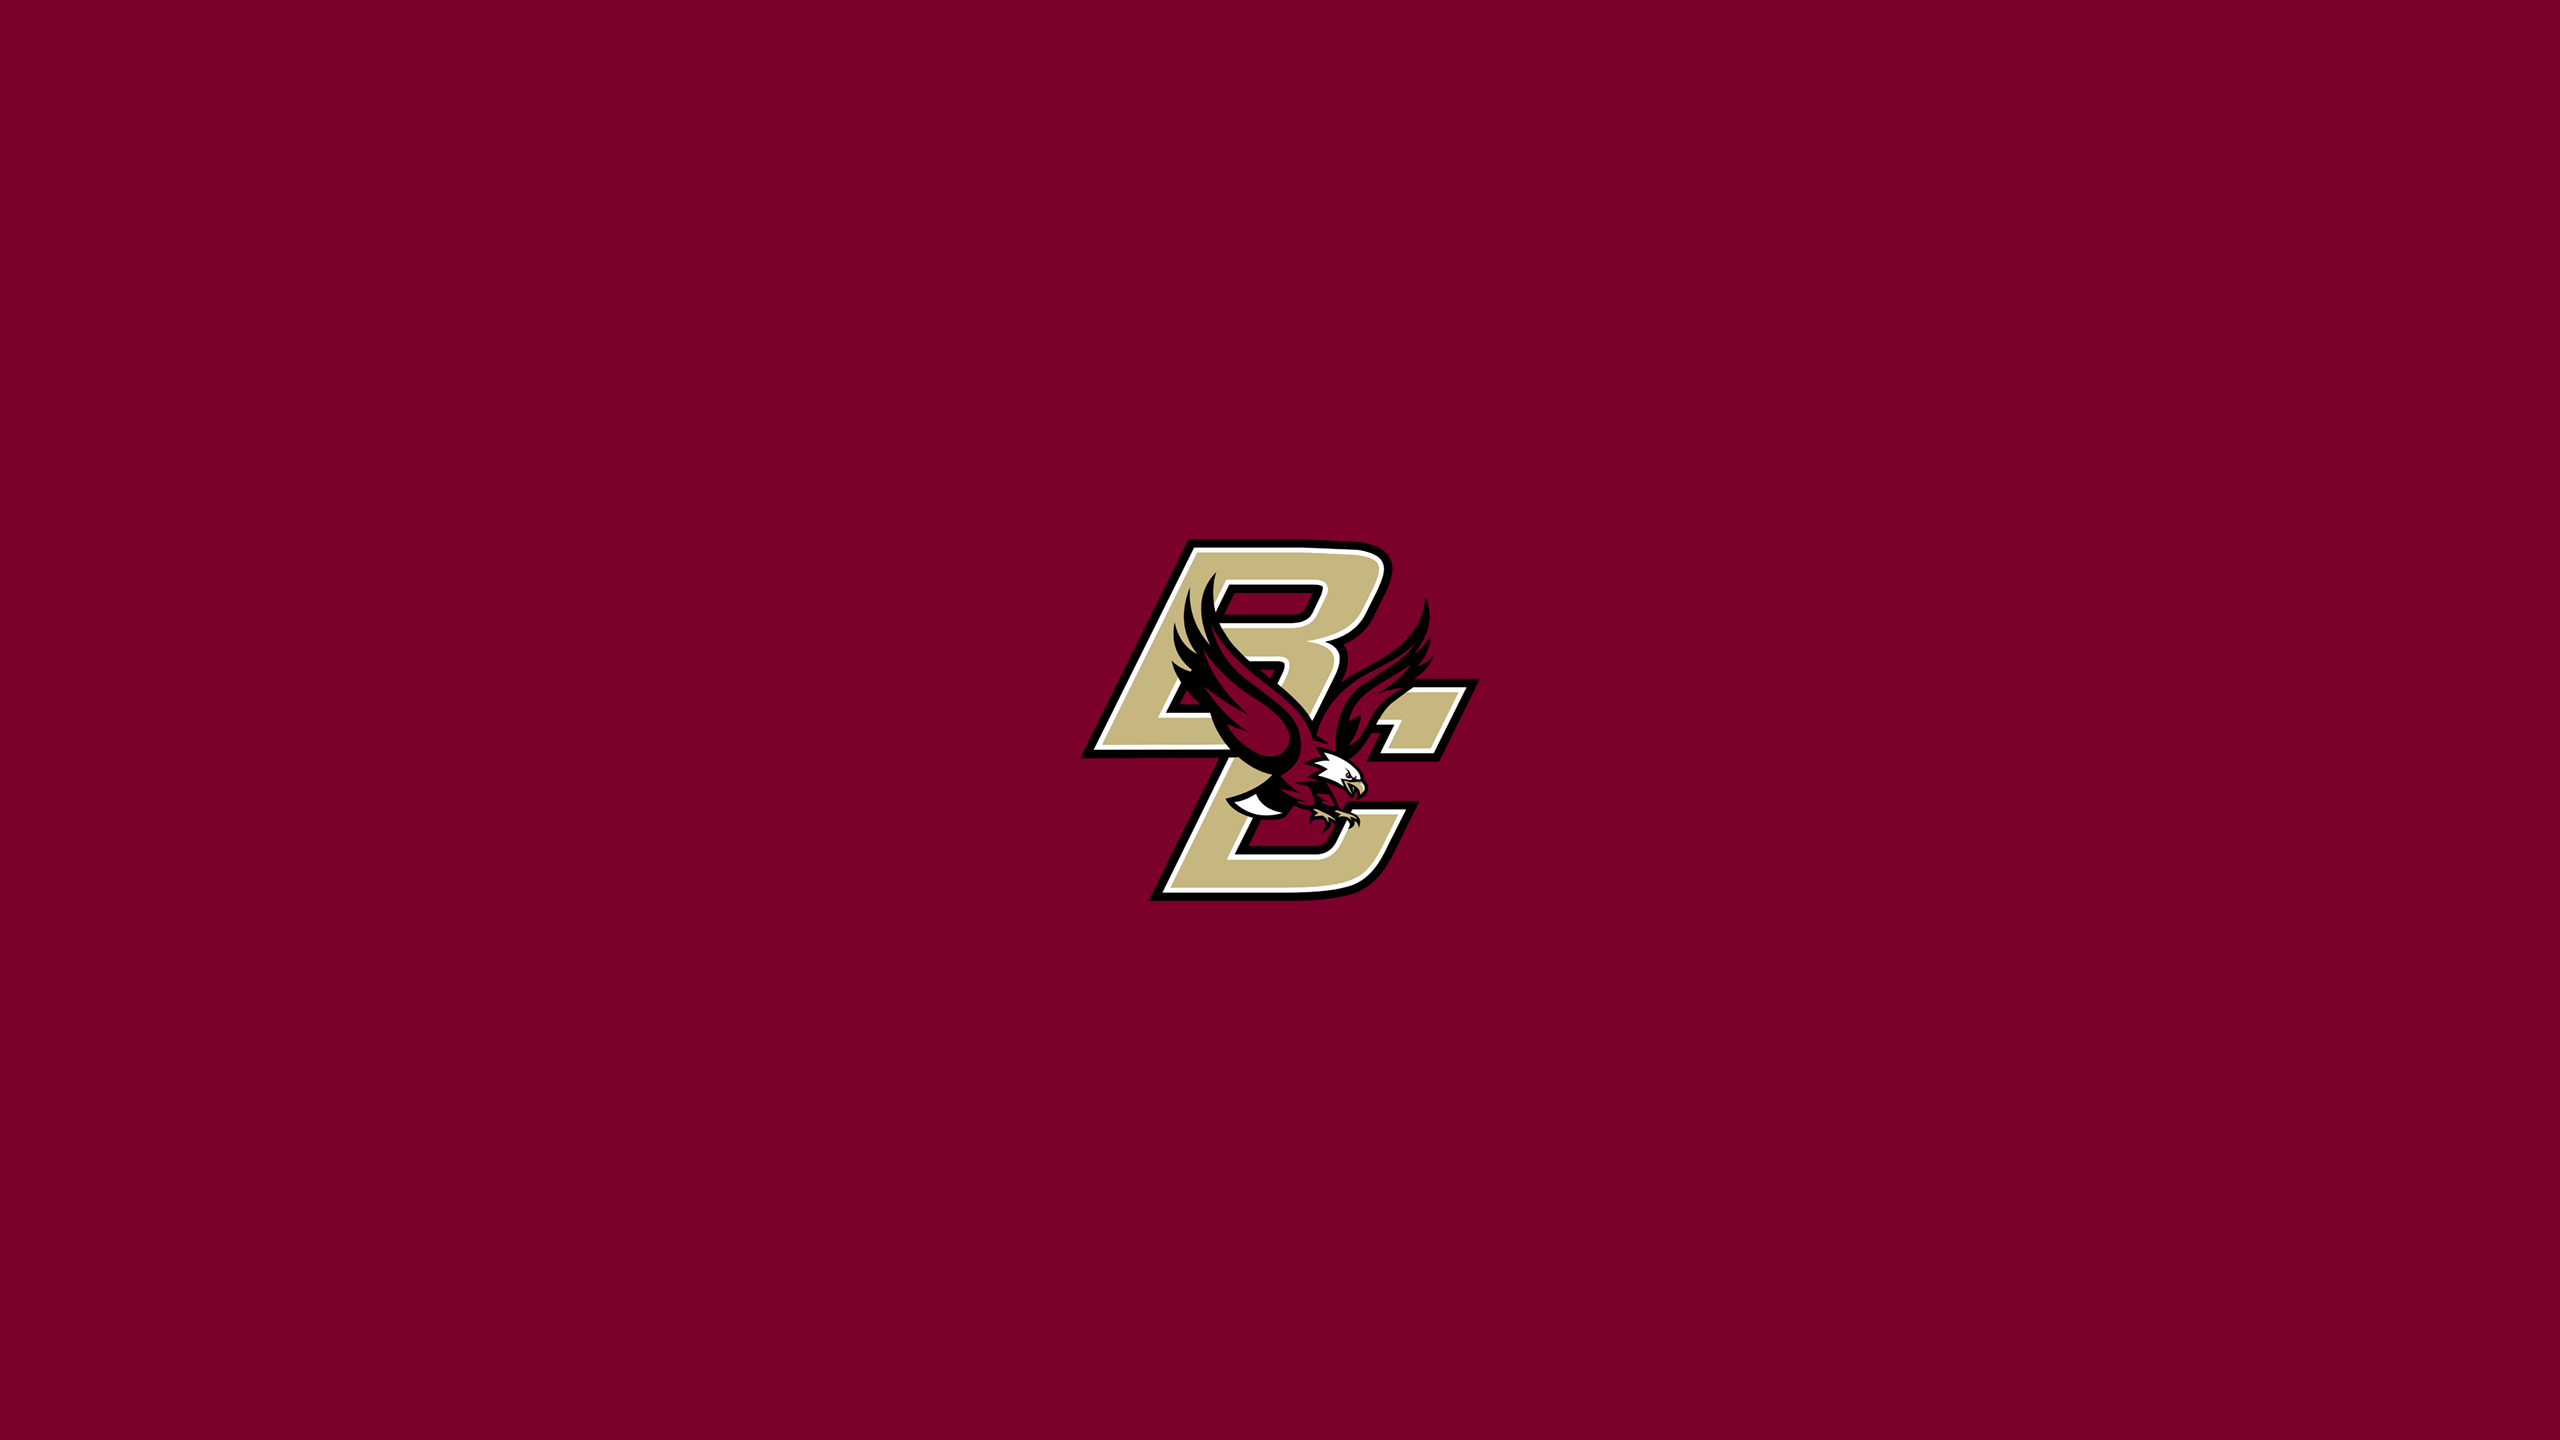 Boston College Eagles Basketball - NCAAB - Square Bettor